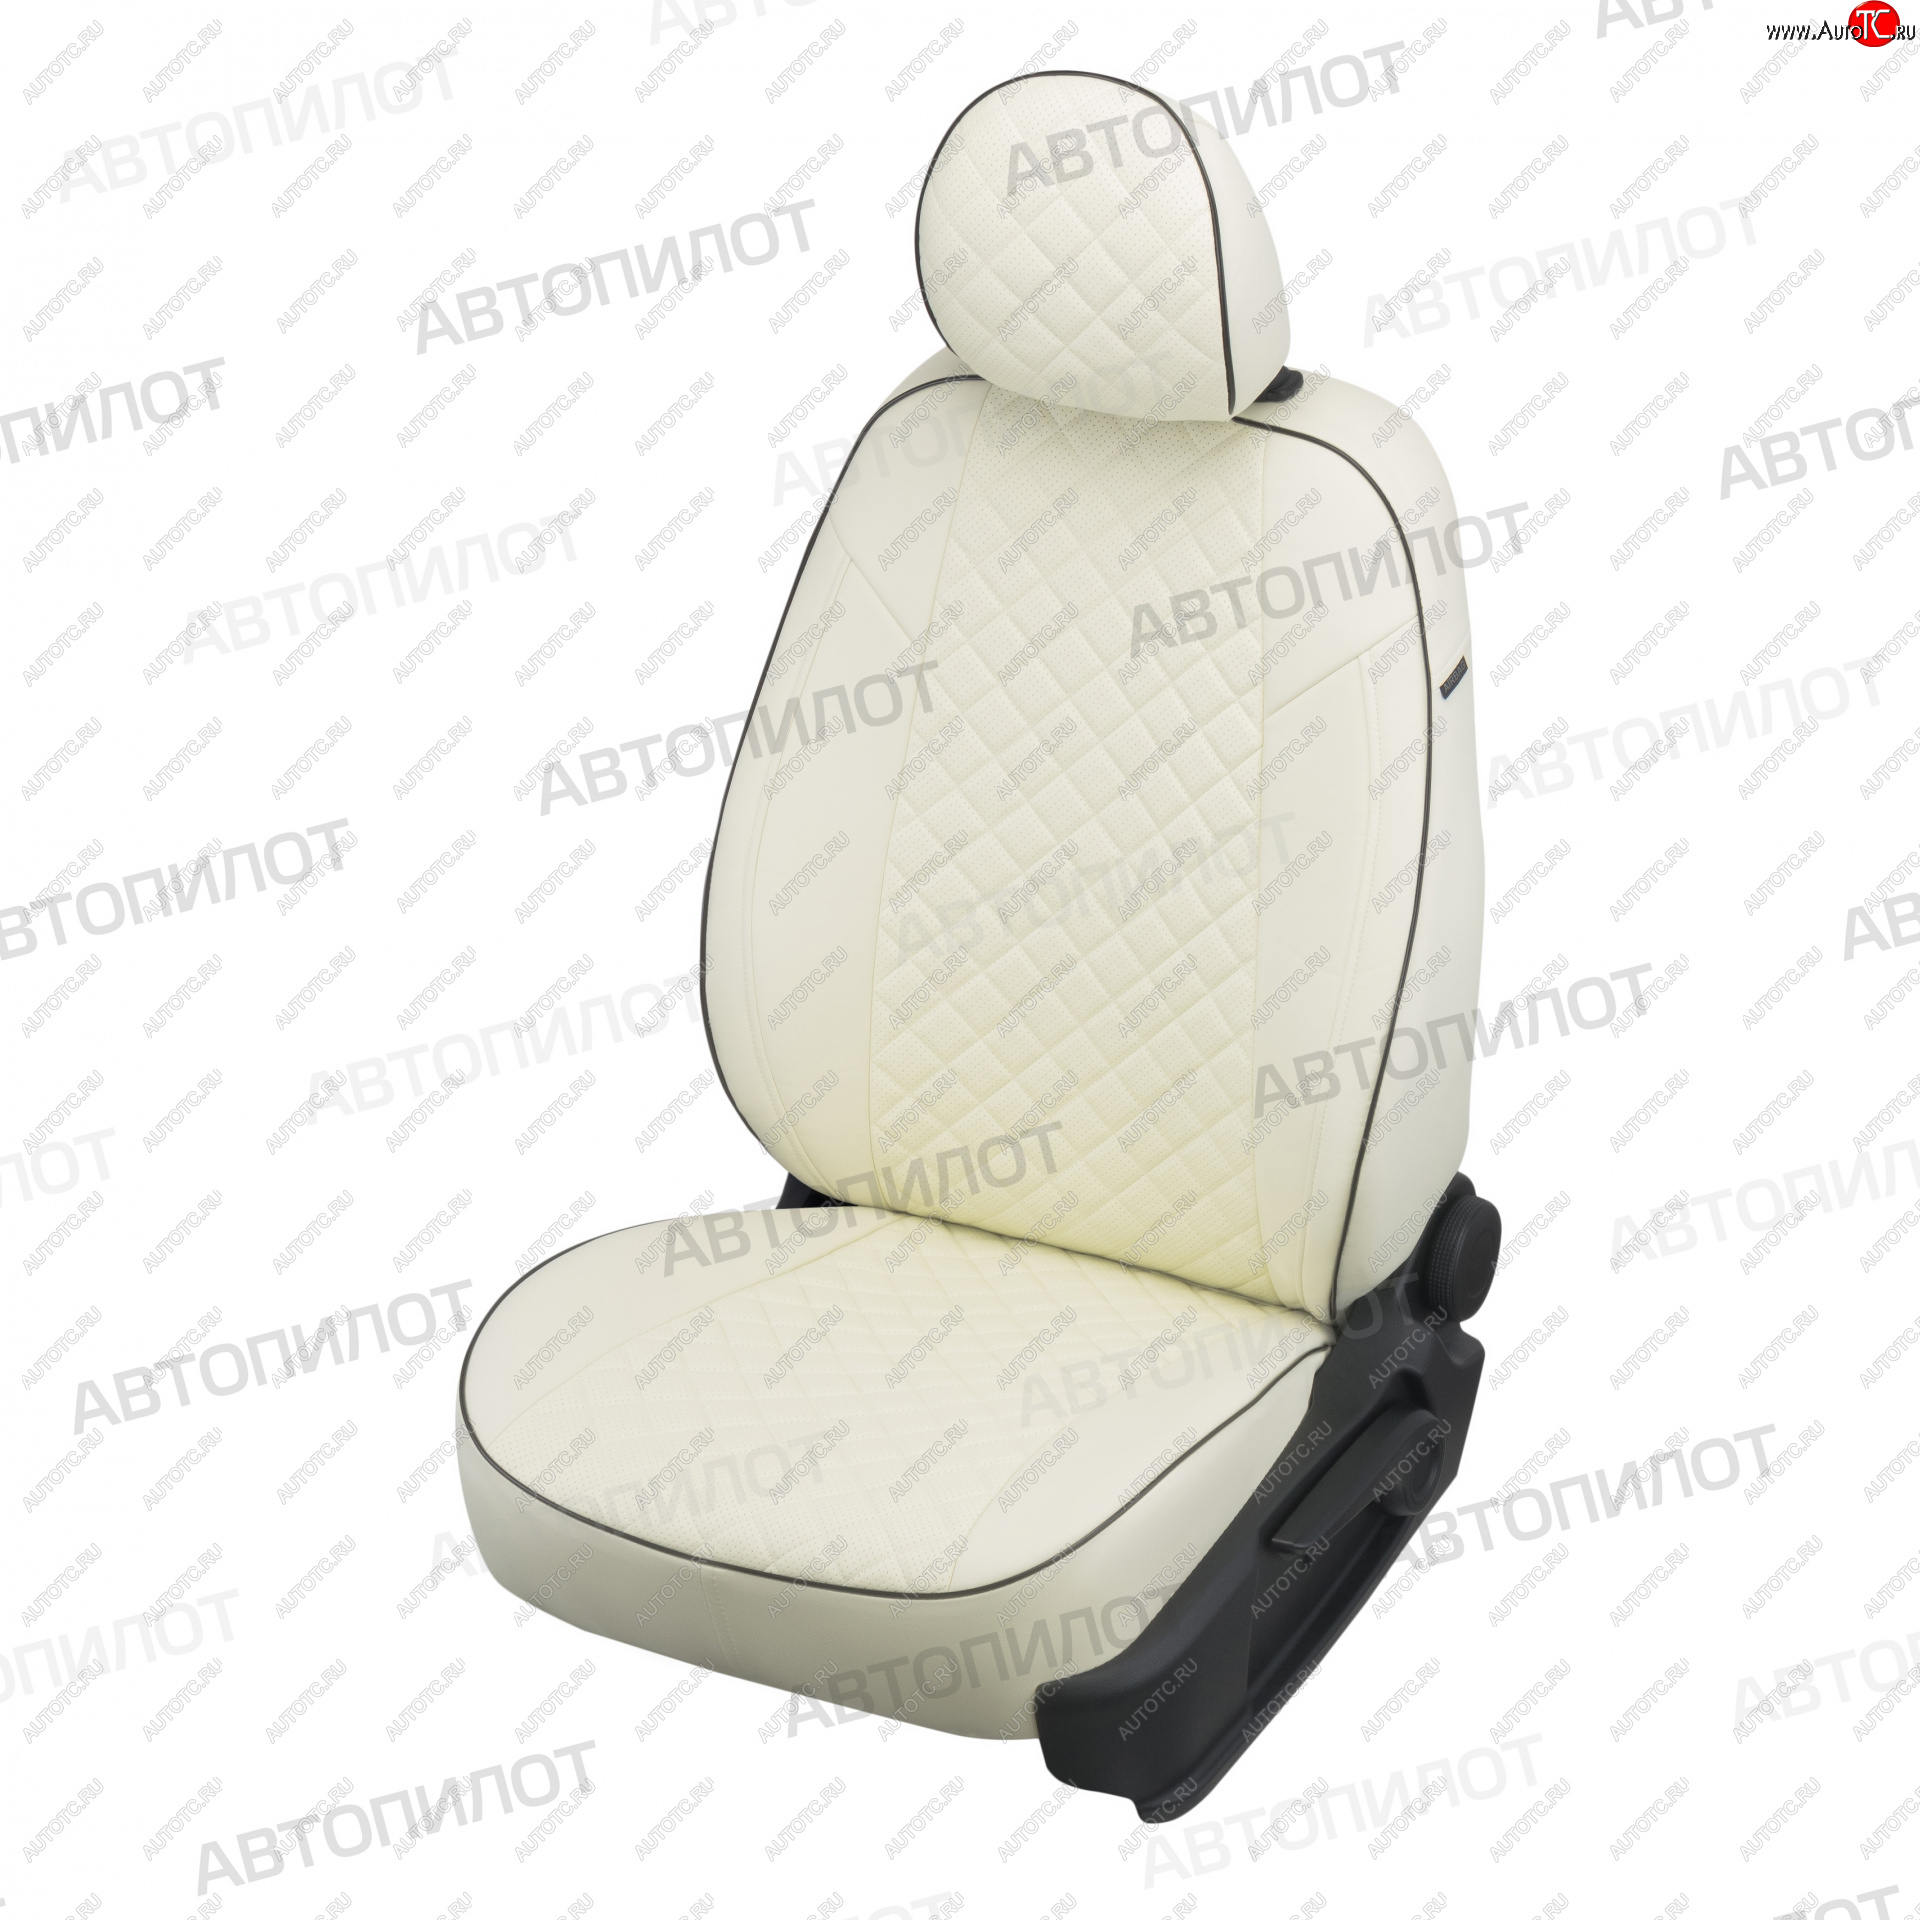 14 499 р. Чехлы сидений (экокожа, Classic) Автопилот Ромб KIA Cerato 3 YD дорестайлинг седан (2013-2016) (белый)